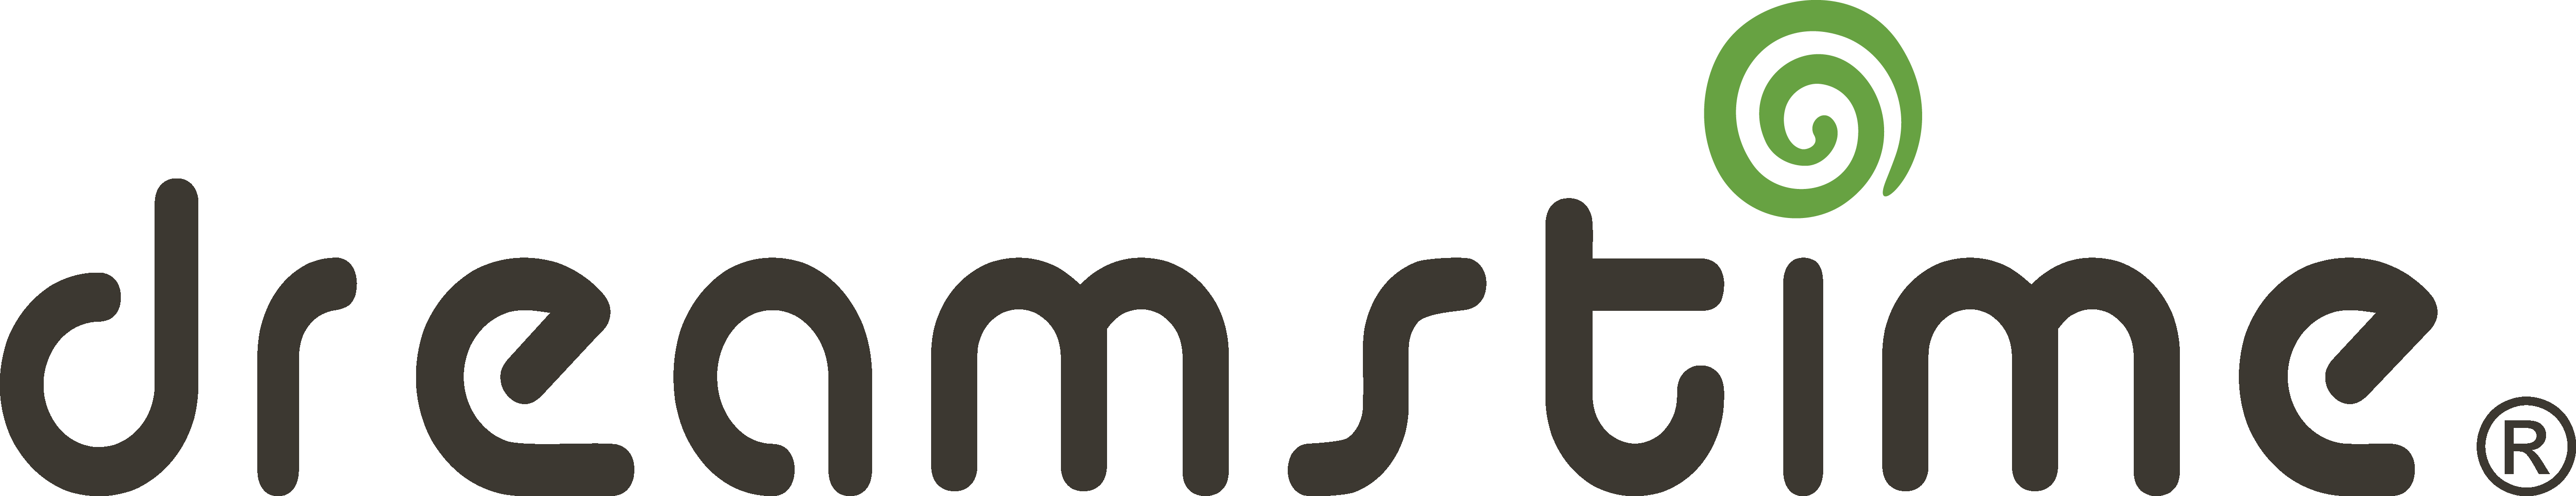 dreamstime-logo